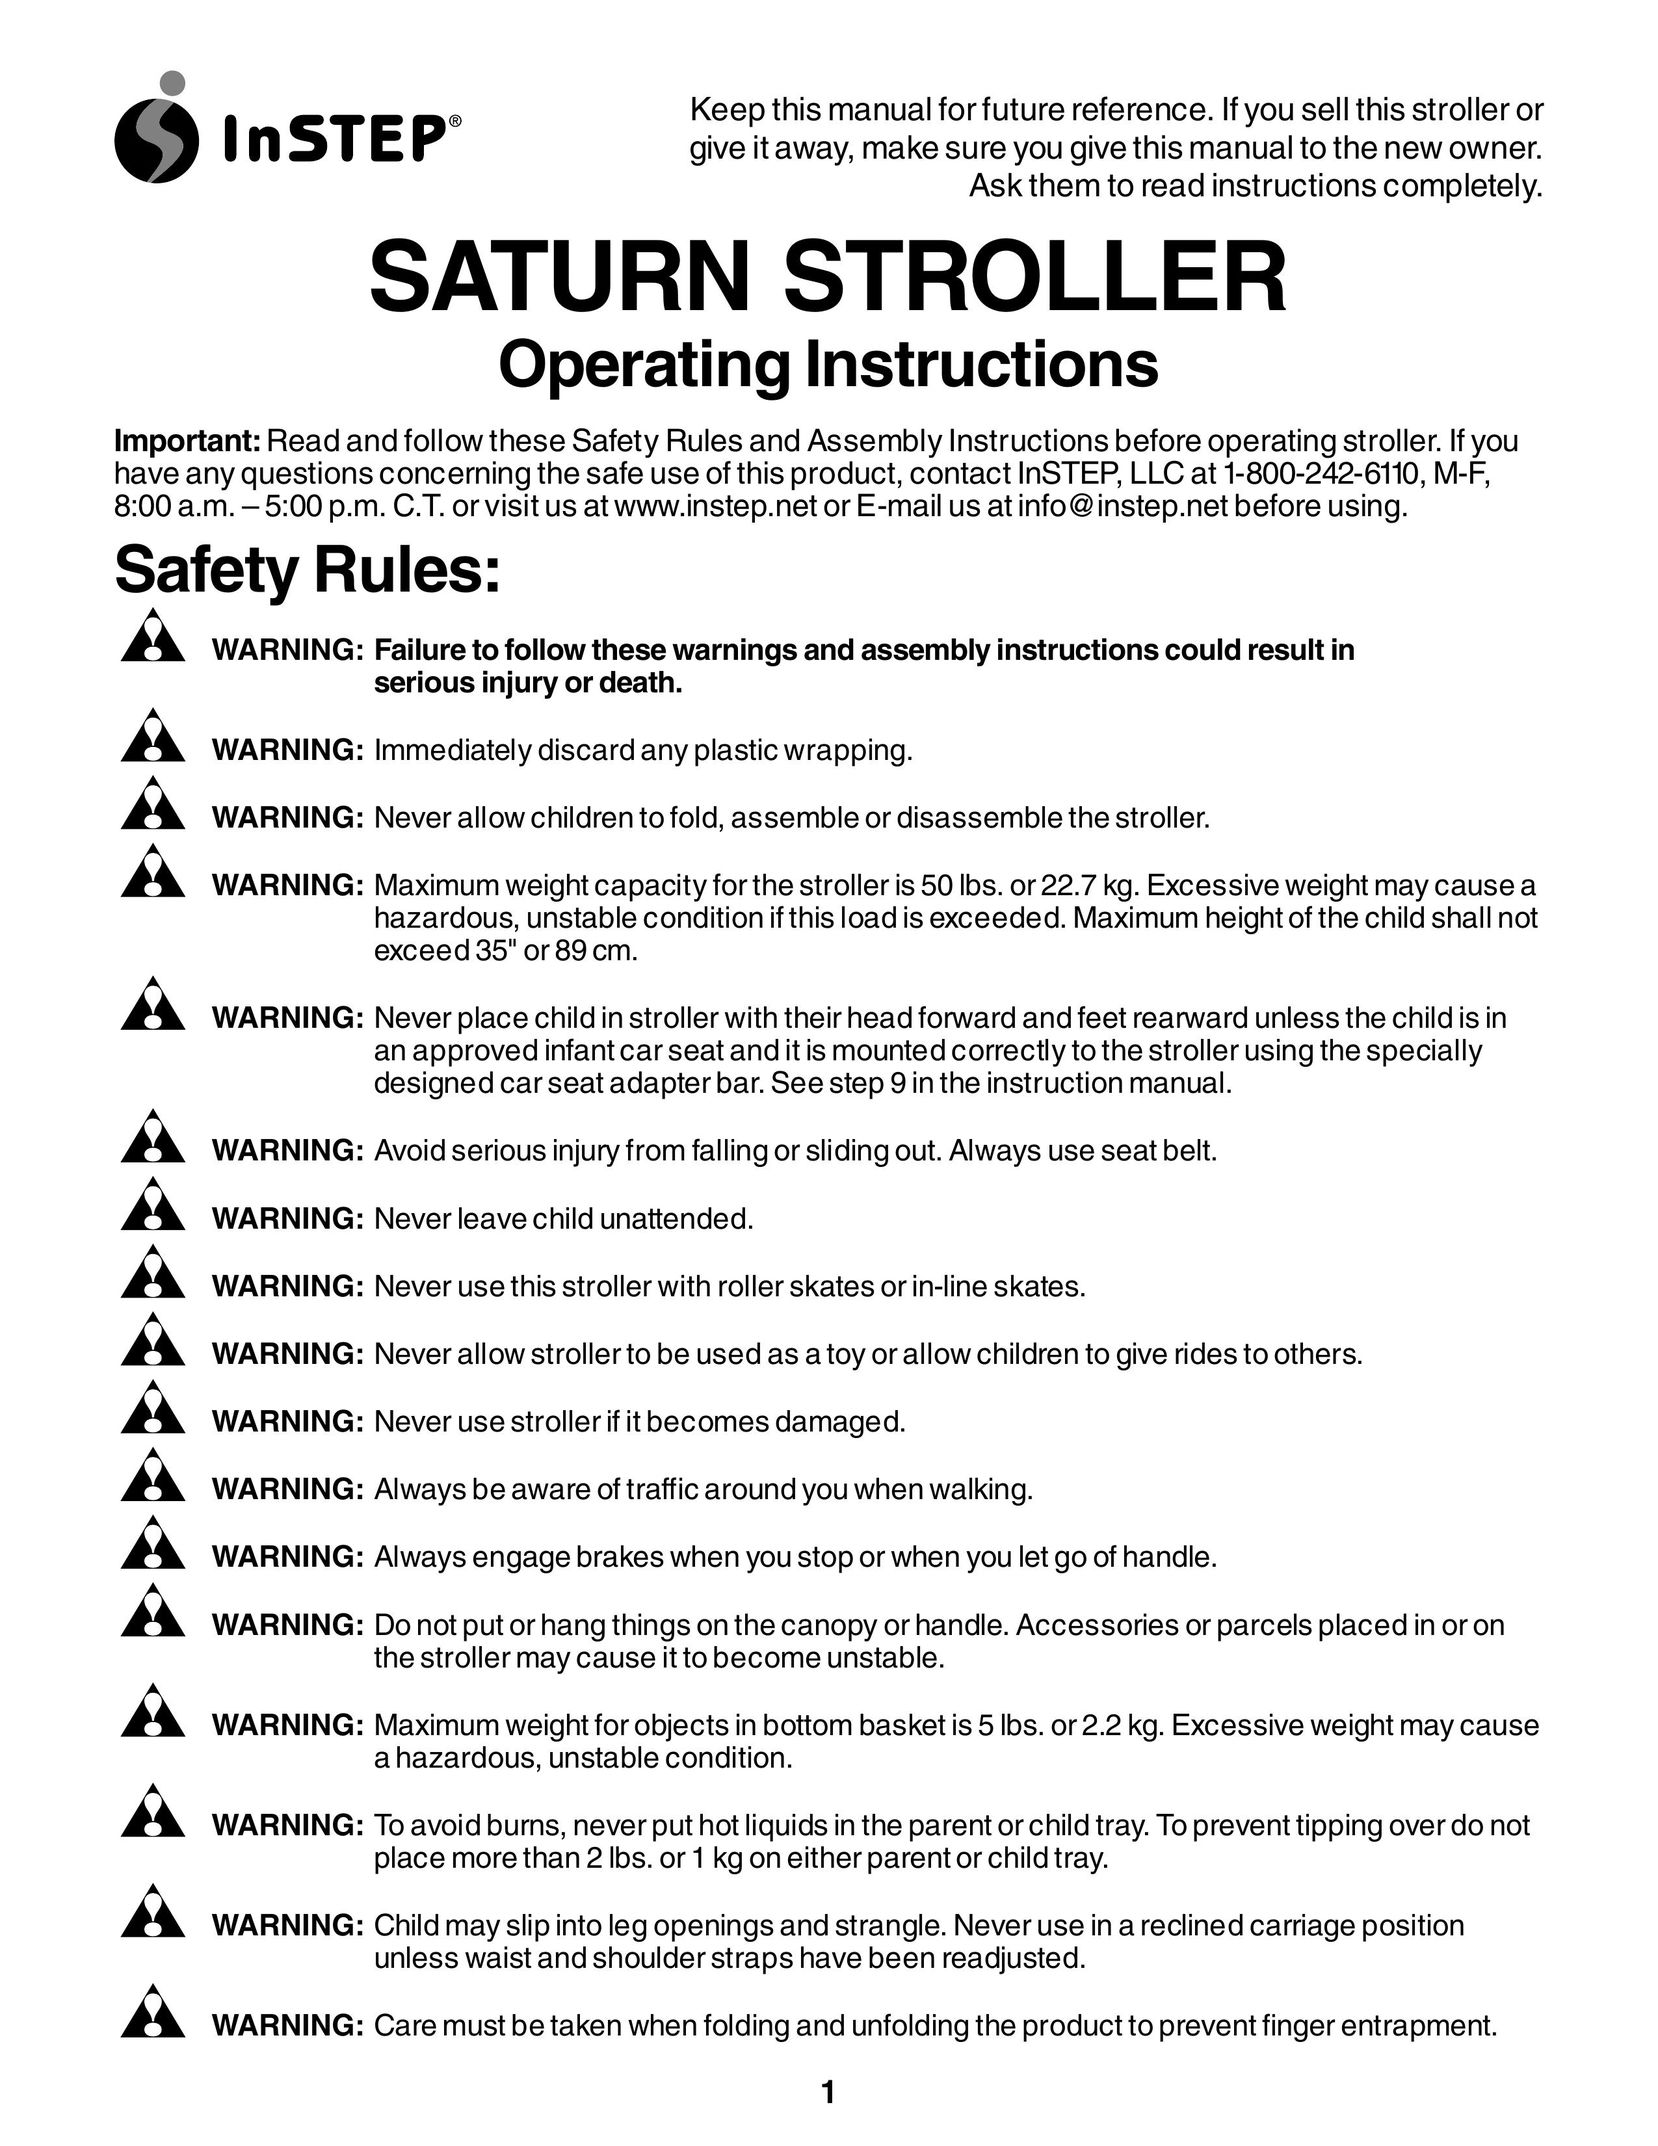 InStep SS150 Stroller User Manual